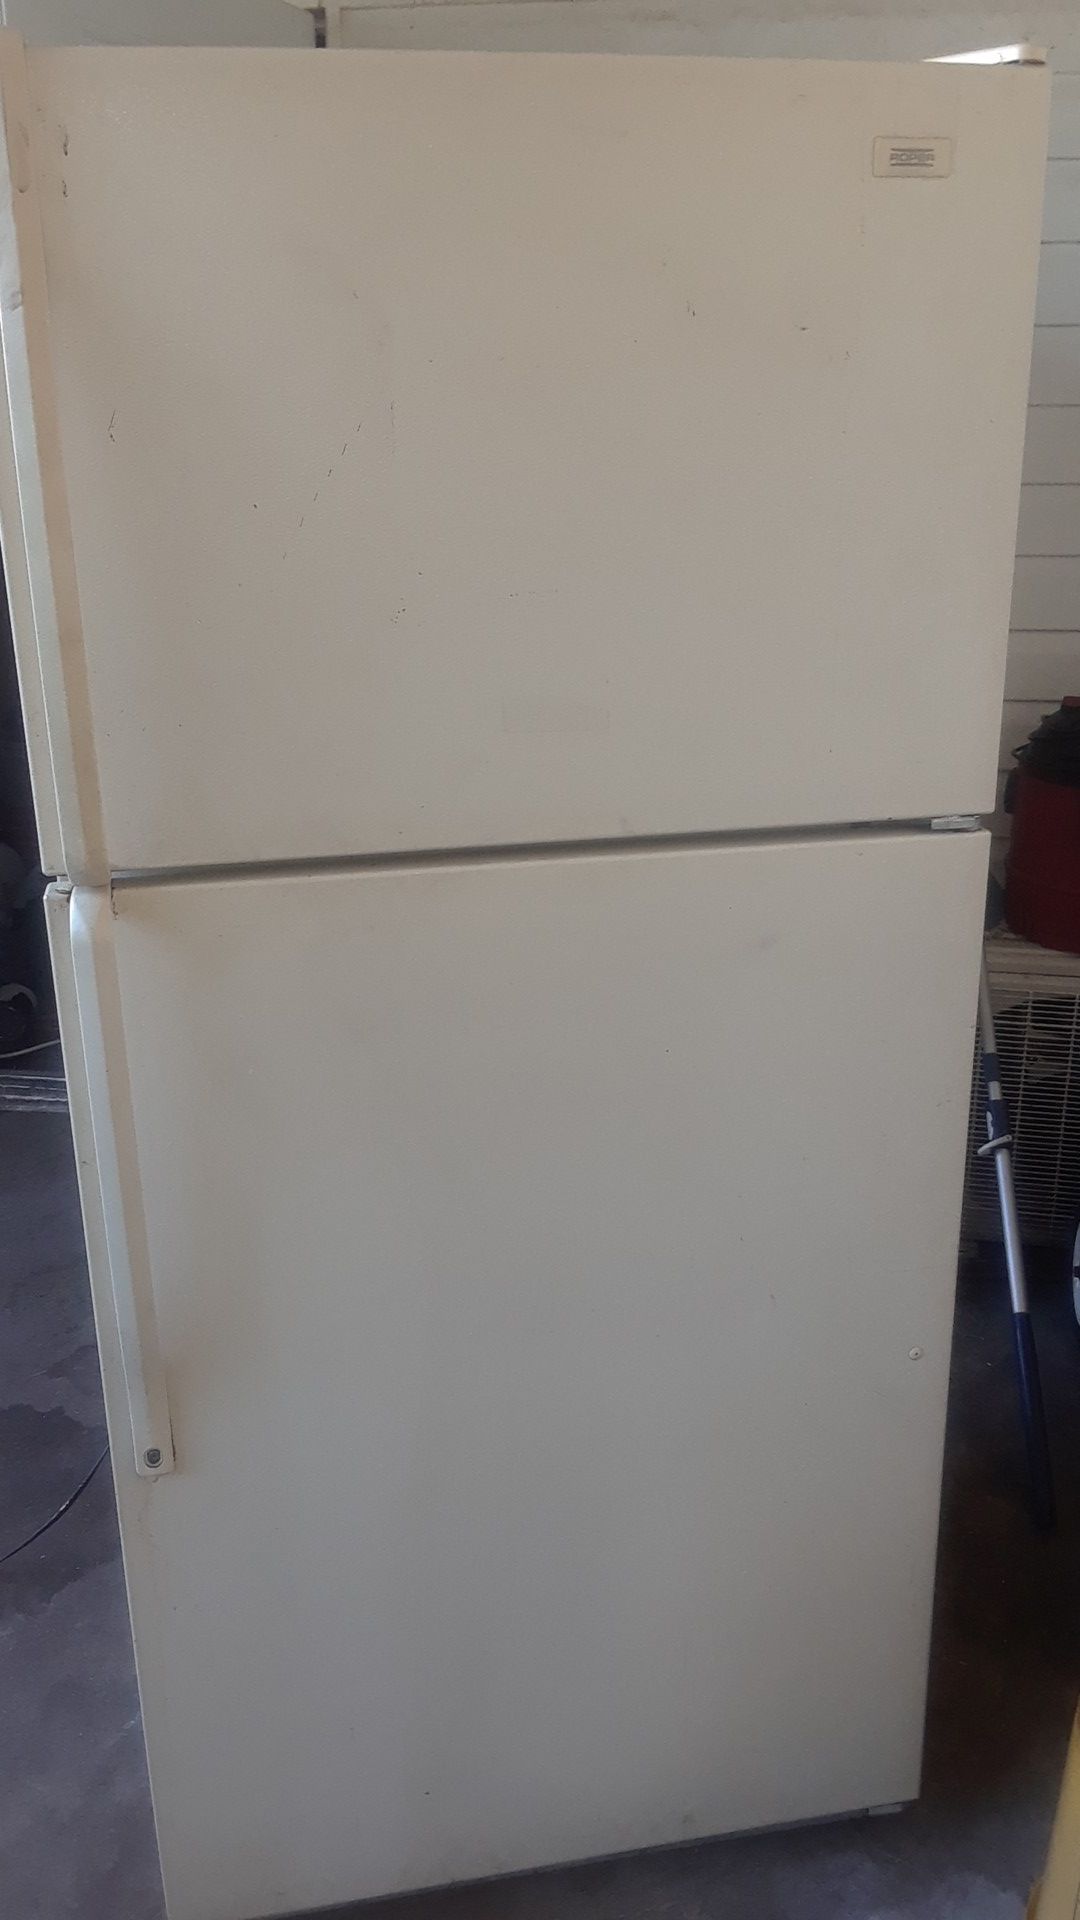 Refrigerator in great shape